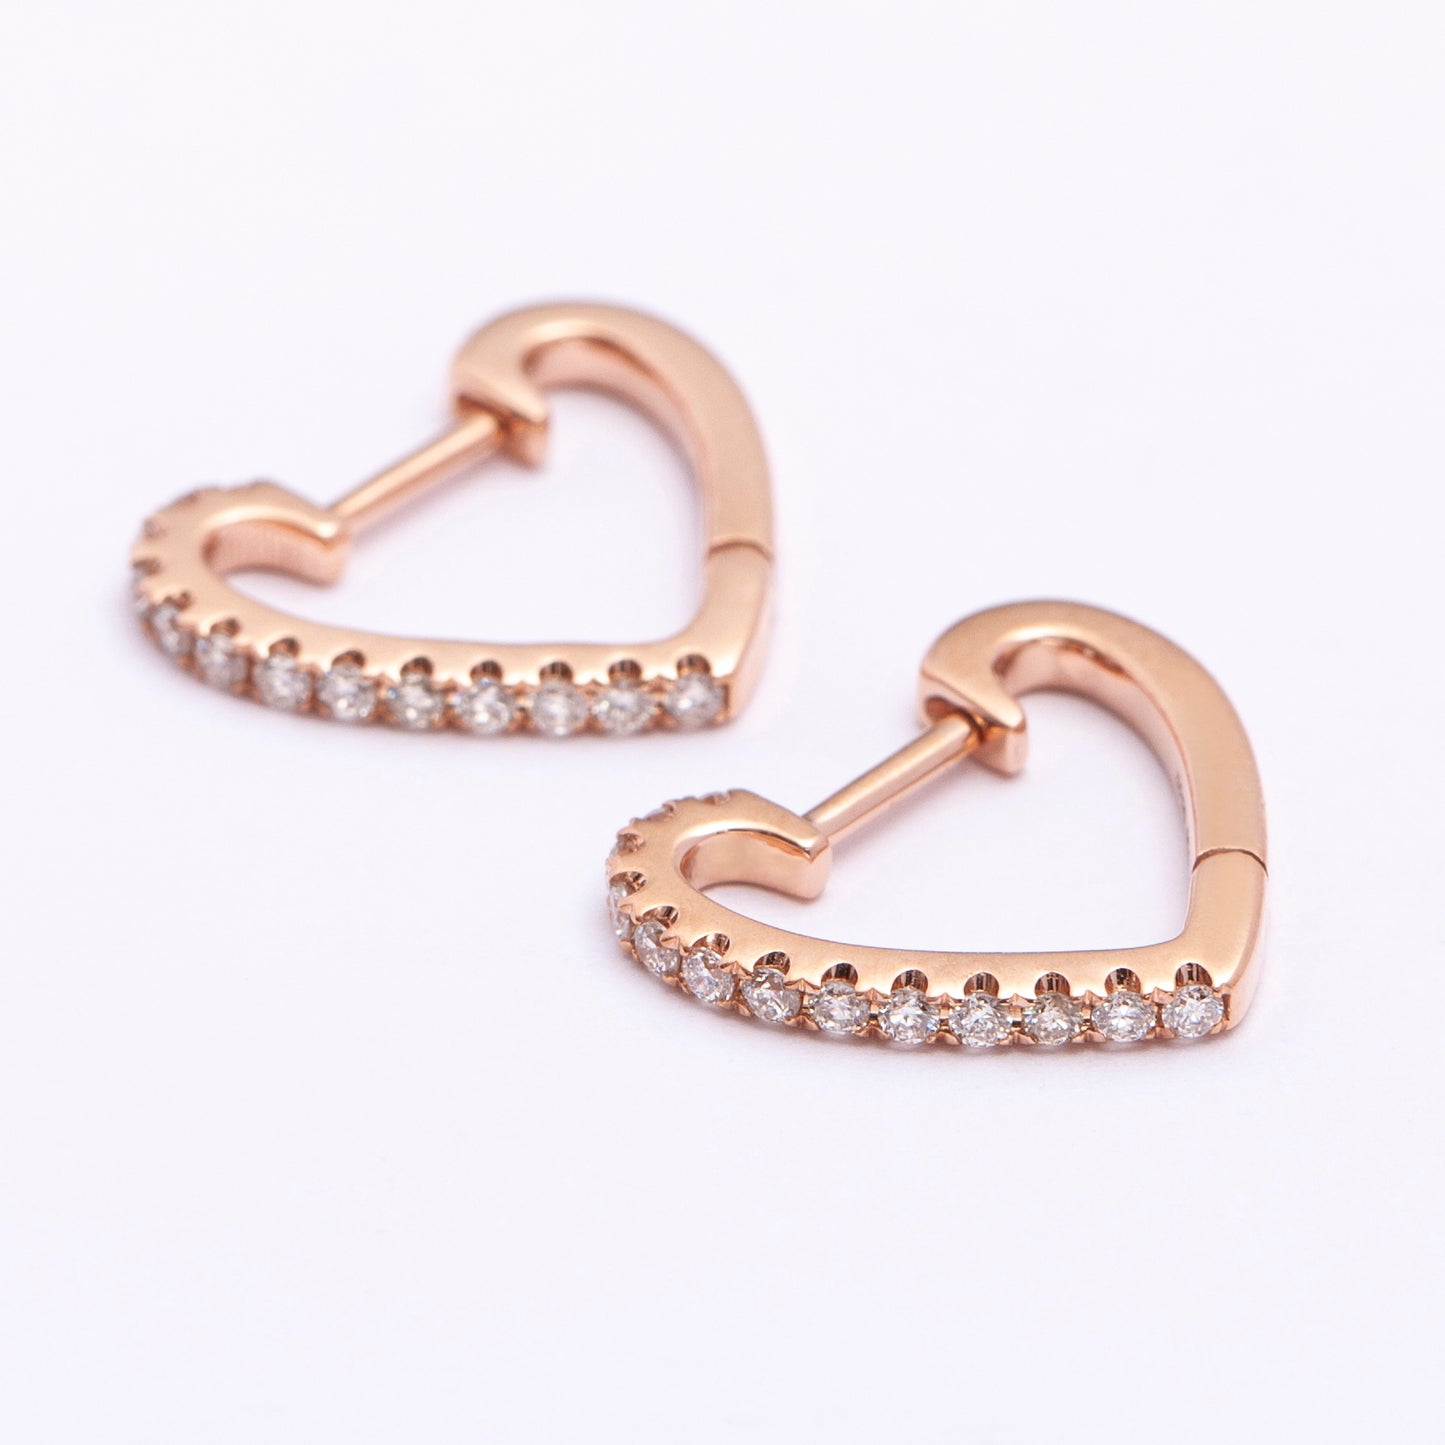 Gold Heart Earrings with Diamonds